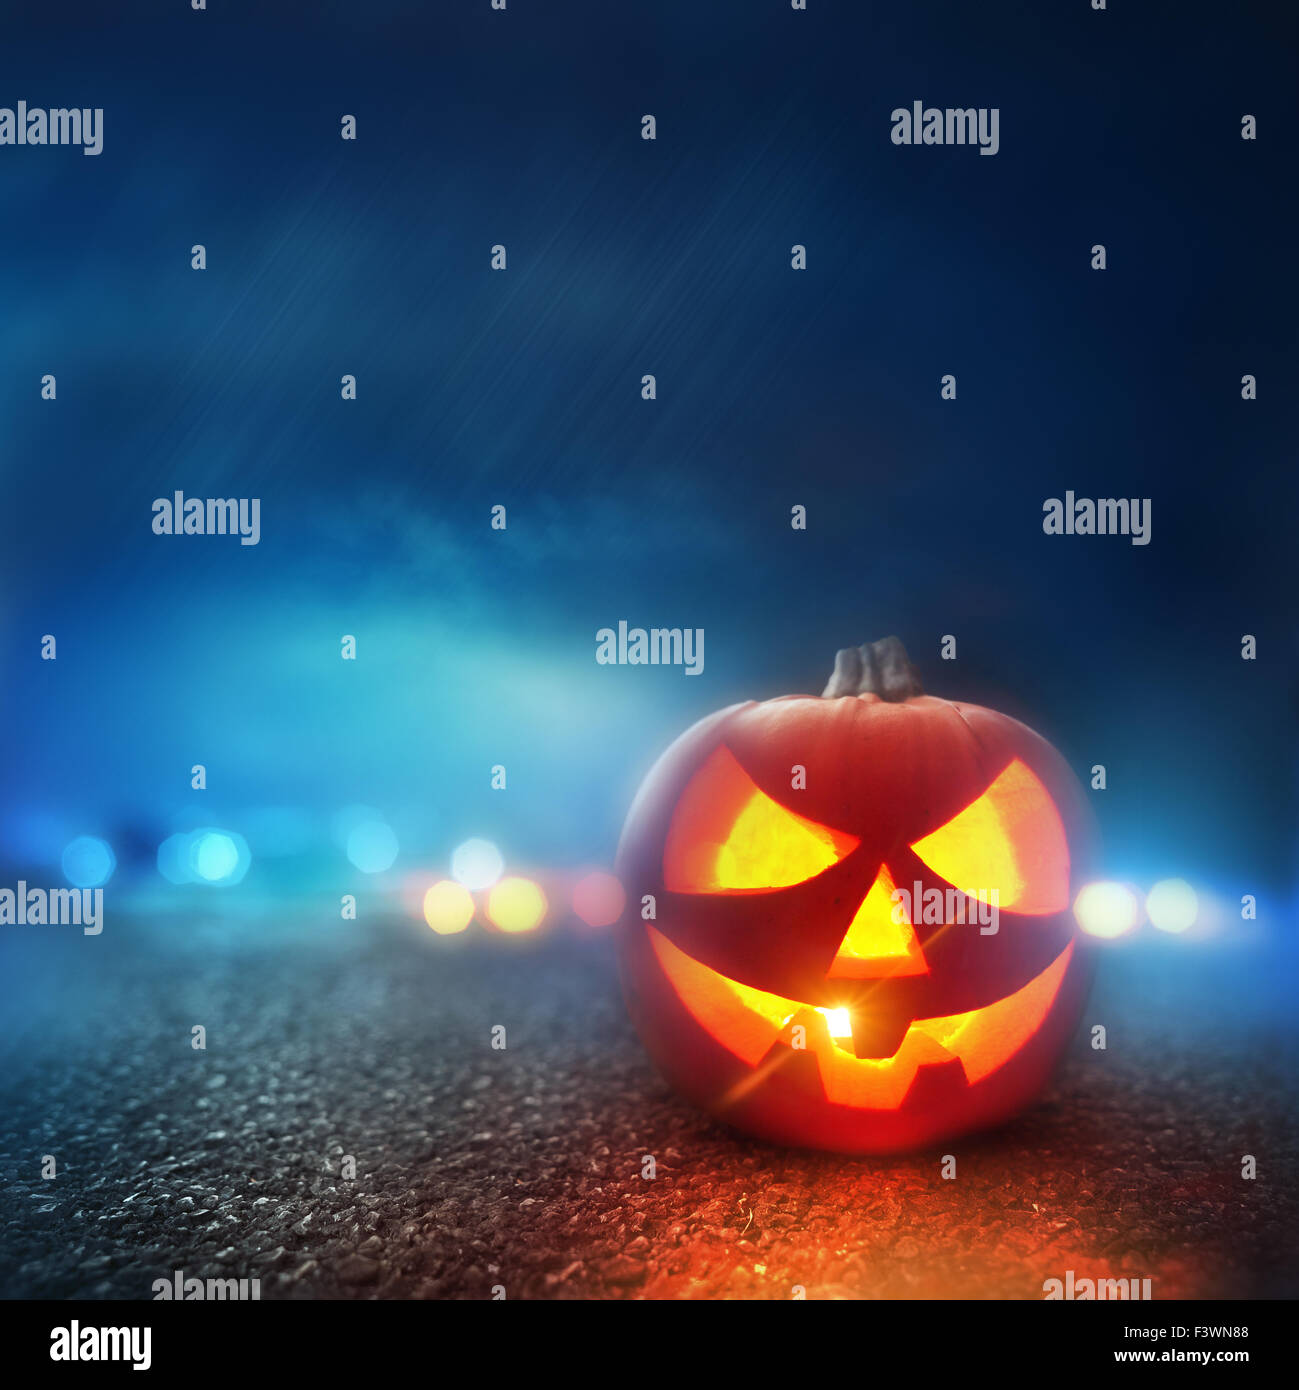 Halloween Evening. A Jack O Lantern Pumpkin glowing orange on Halloween evening. Stock Photo